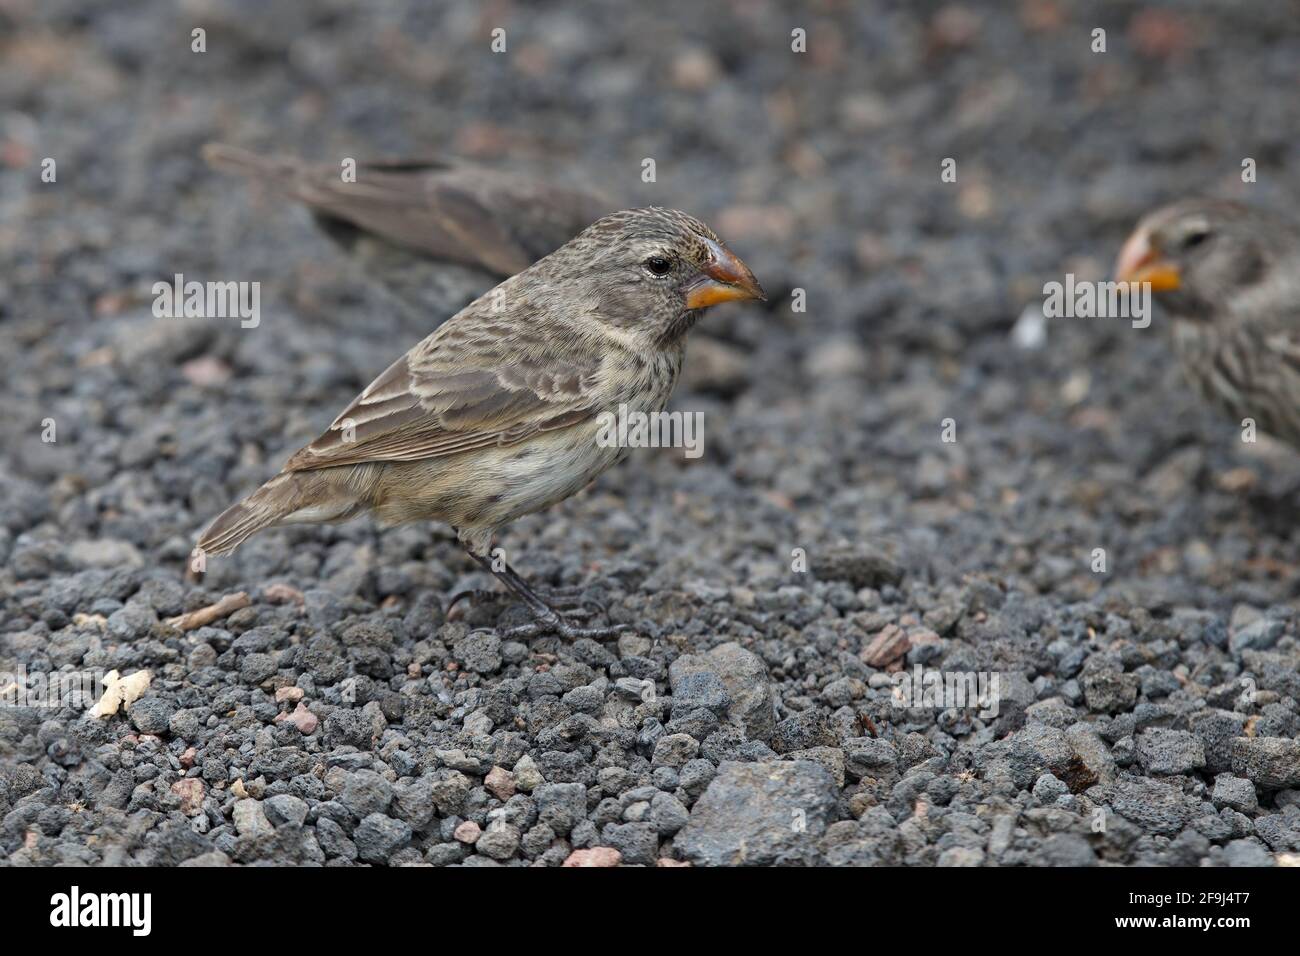 Large ground finch, Darwin center, Santa Cruz, Galapagos, November 2014 Stock Photo